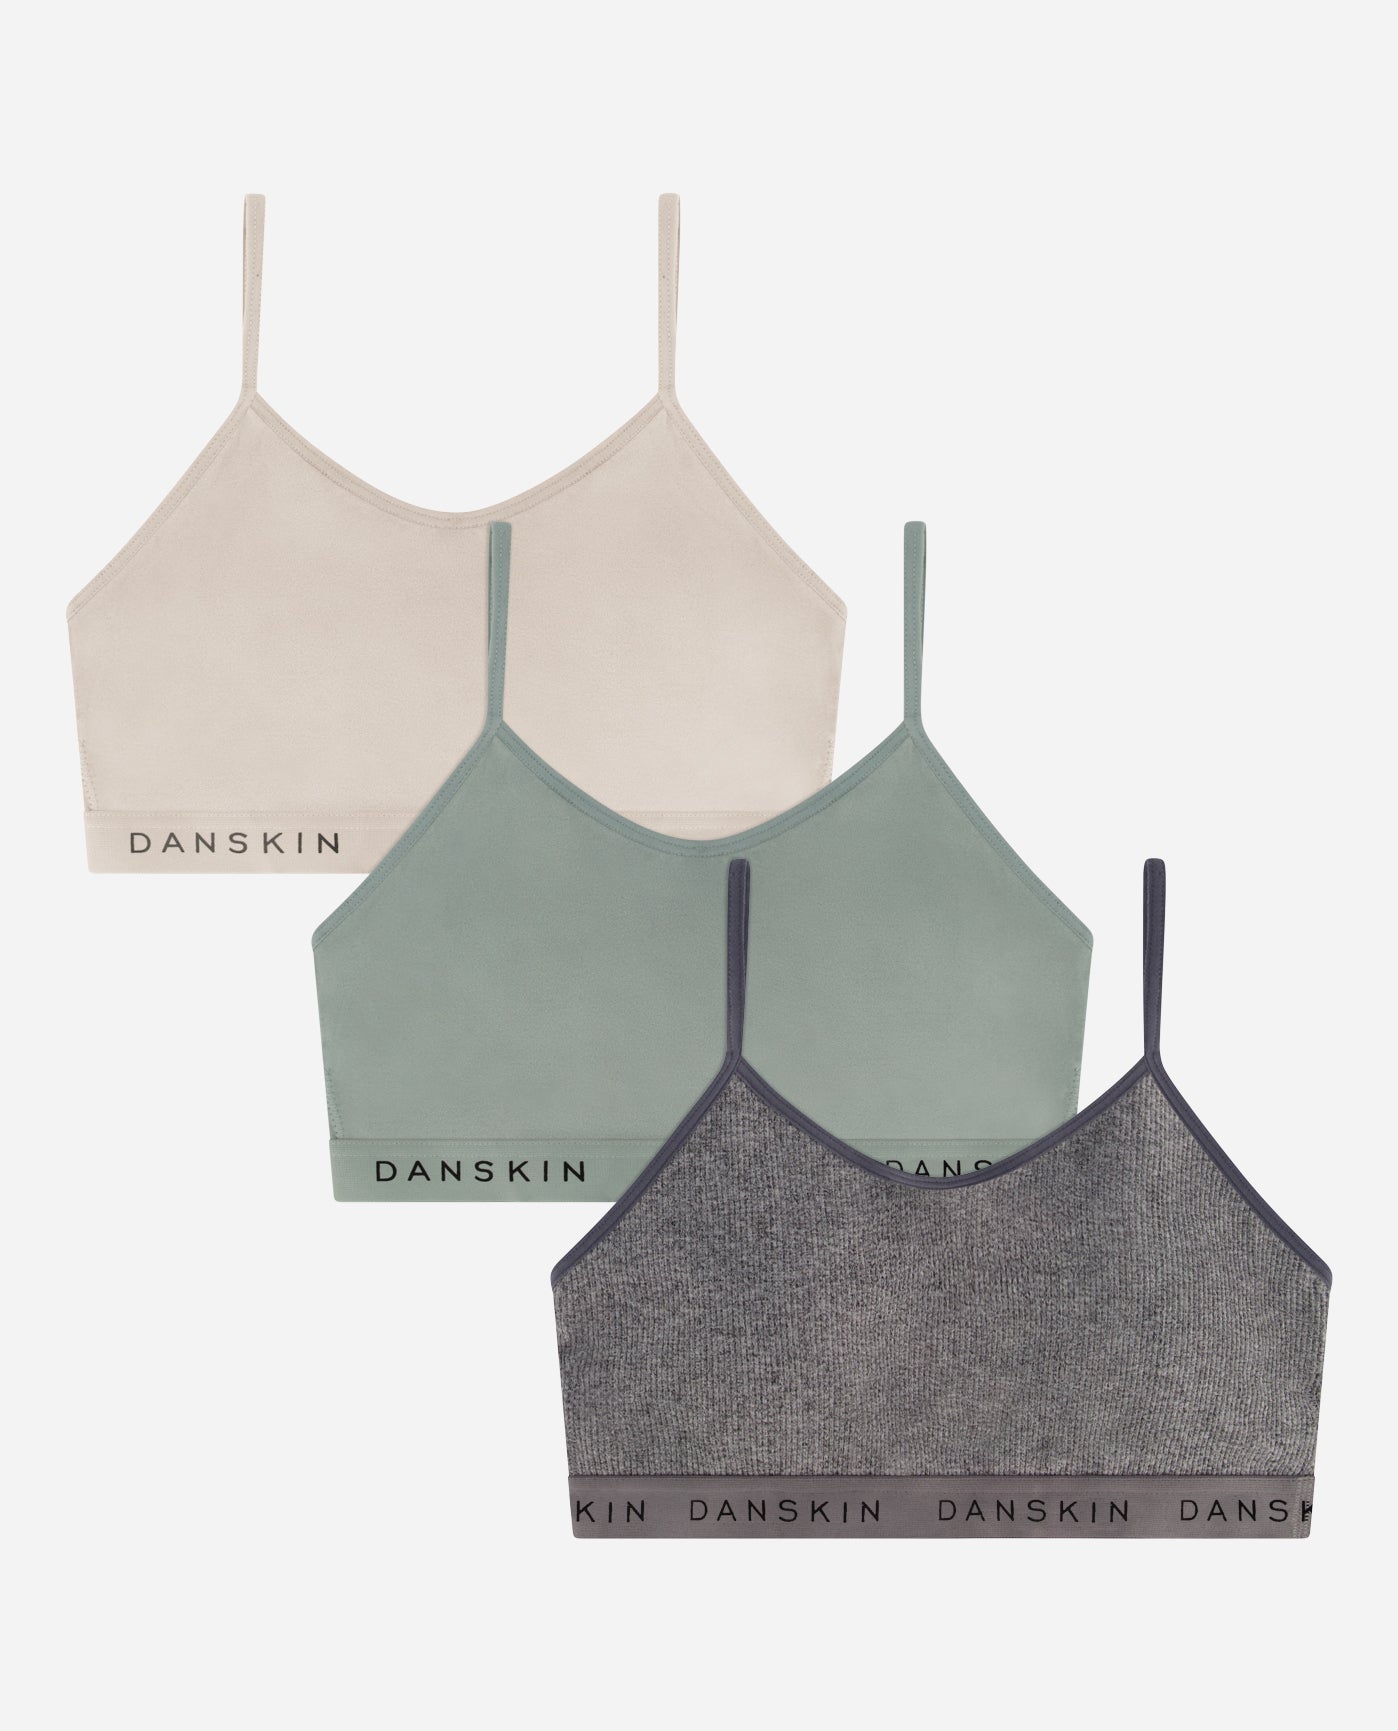 Danskin Now, Intimates & Sleepwear